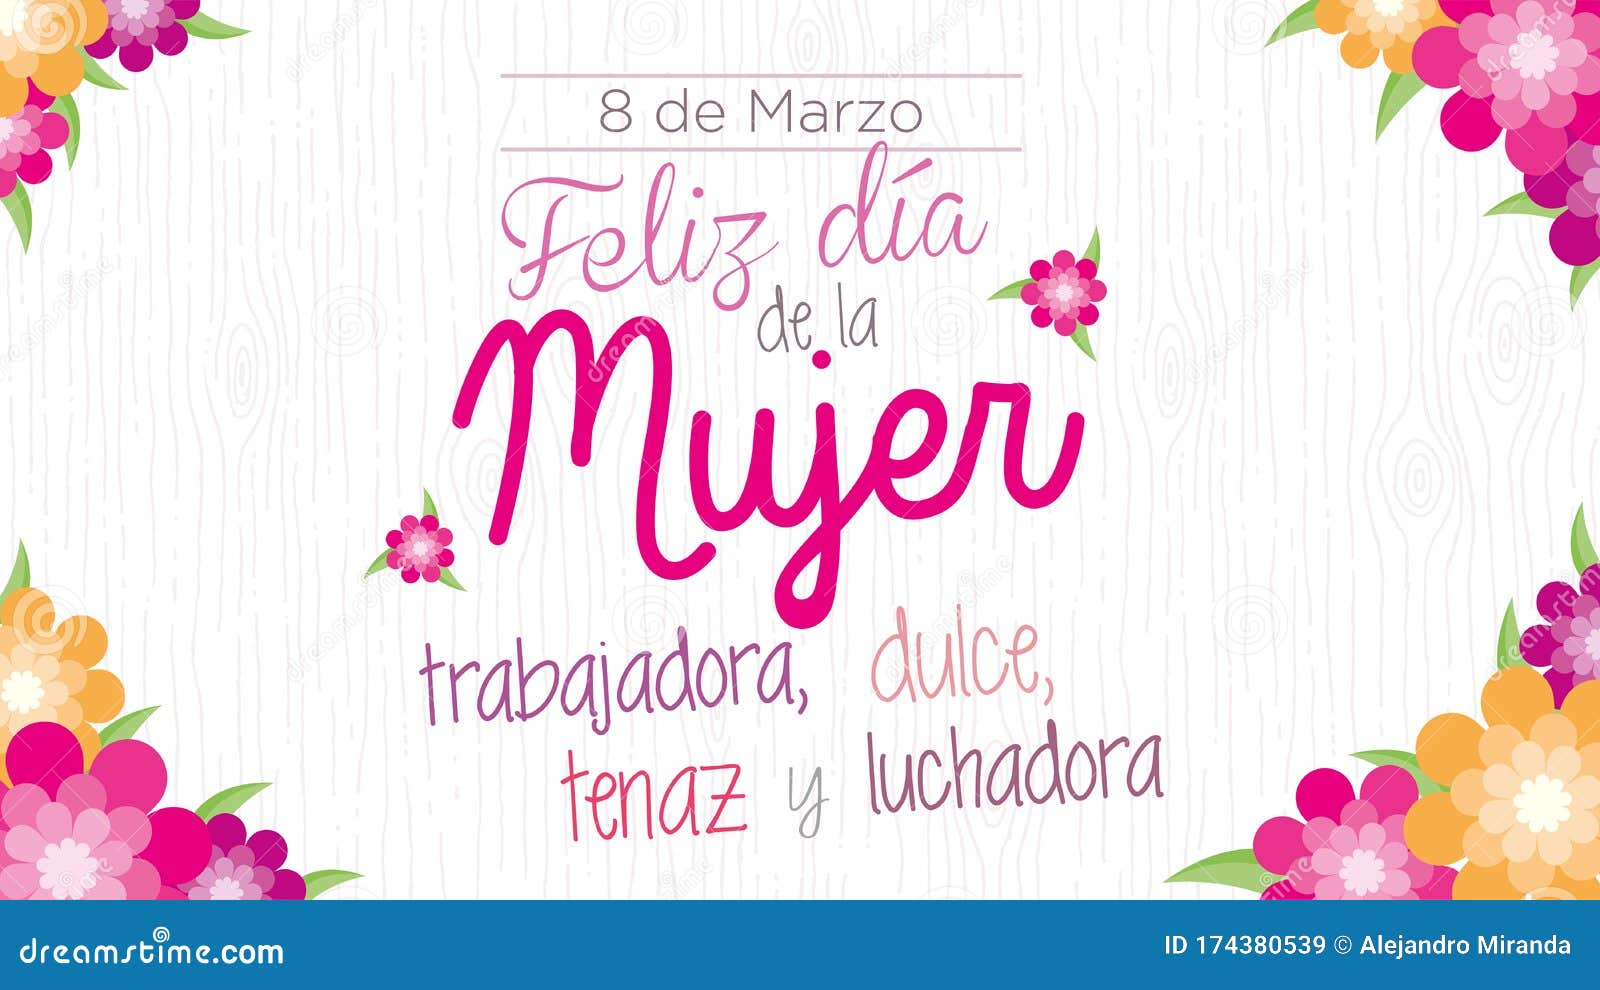 happy day of working, sweet, tenacious and hardworking women in spanish language- greeting card.  image